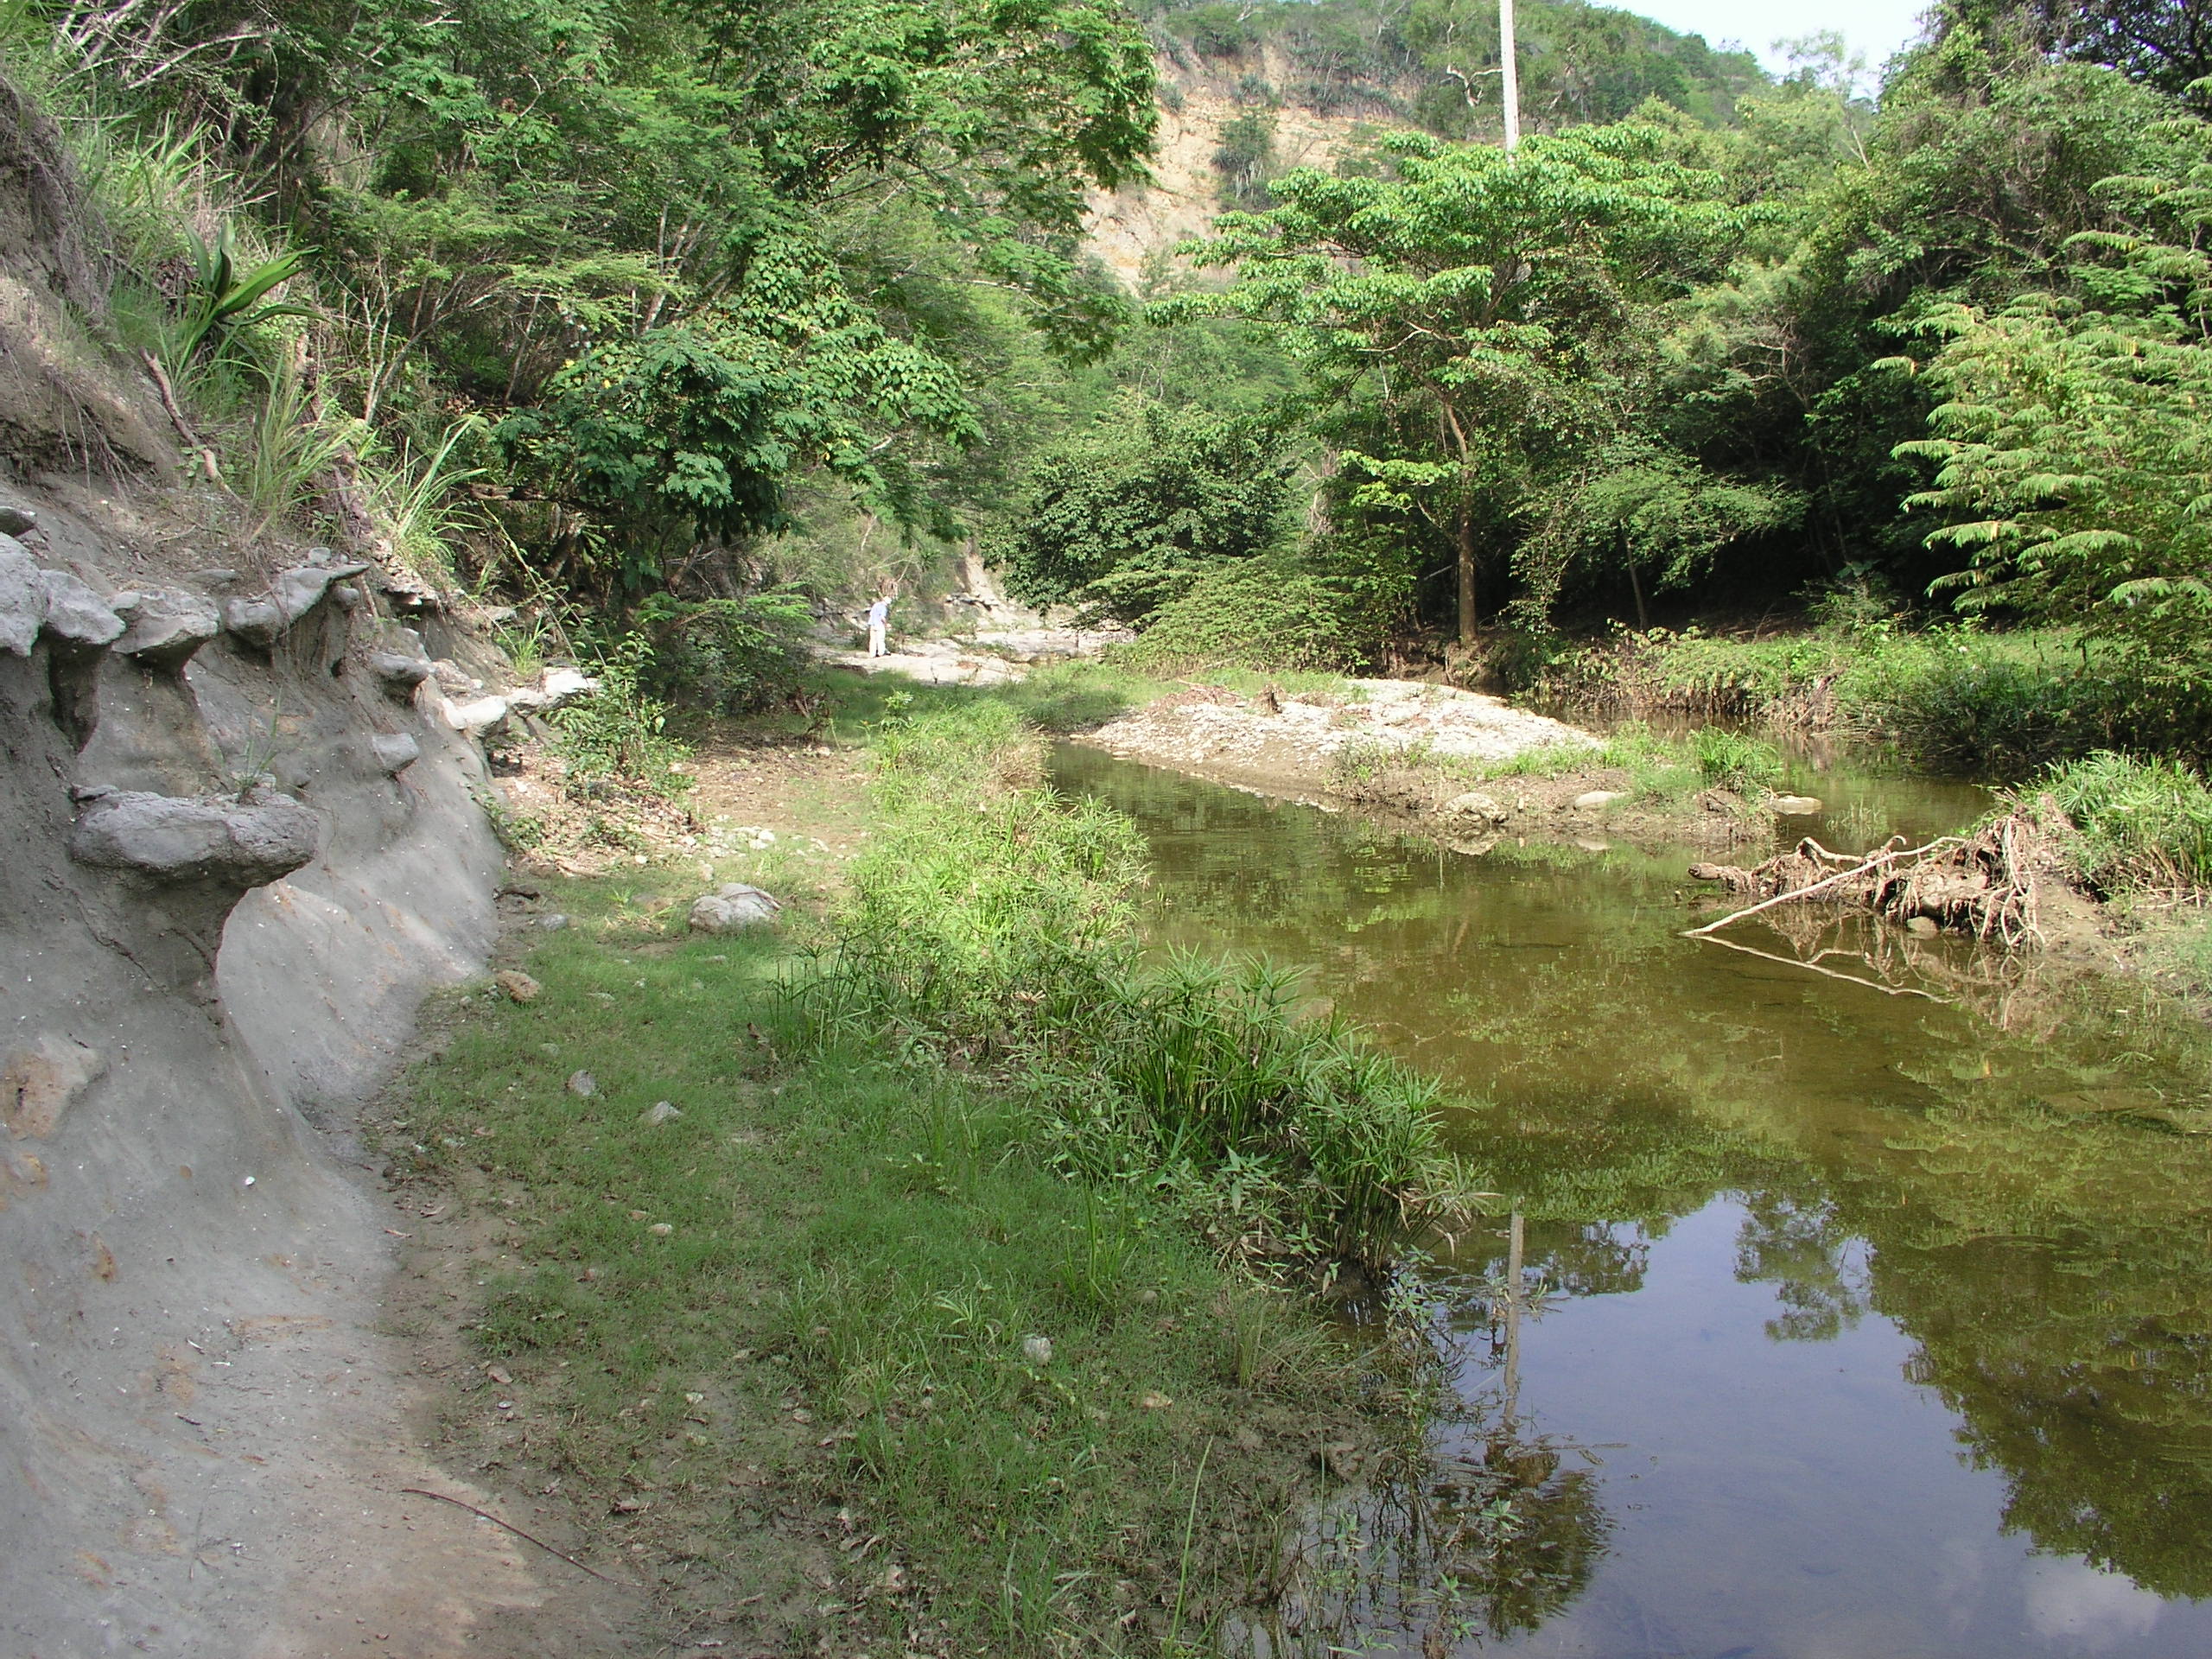 Sediments along this stream in the Dominican Republic contain fossil corals.